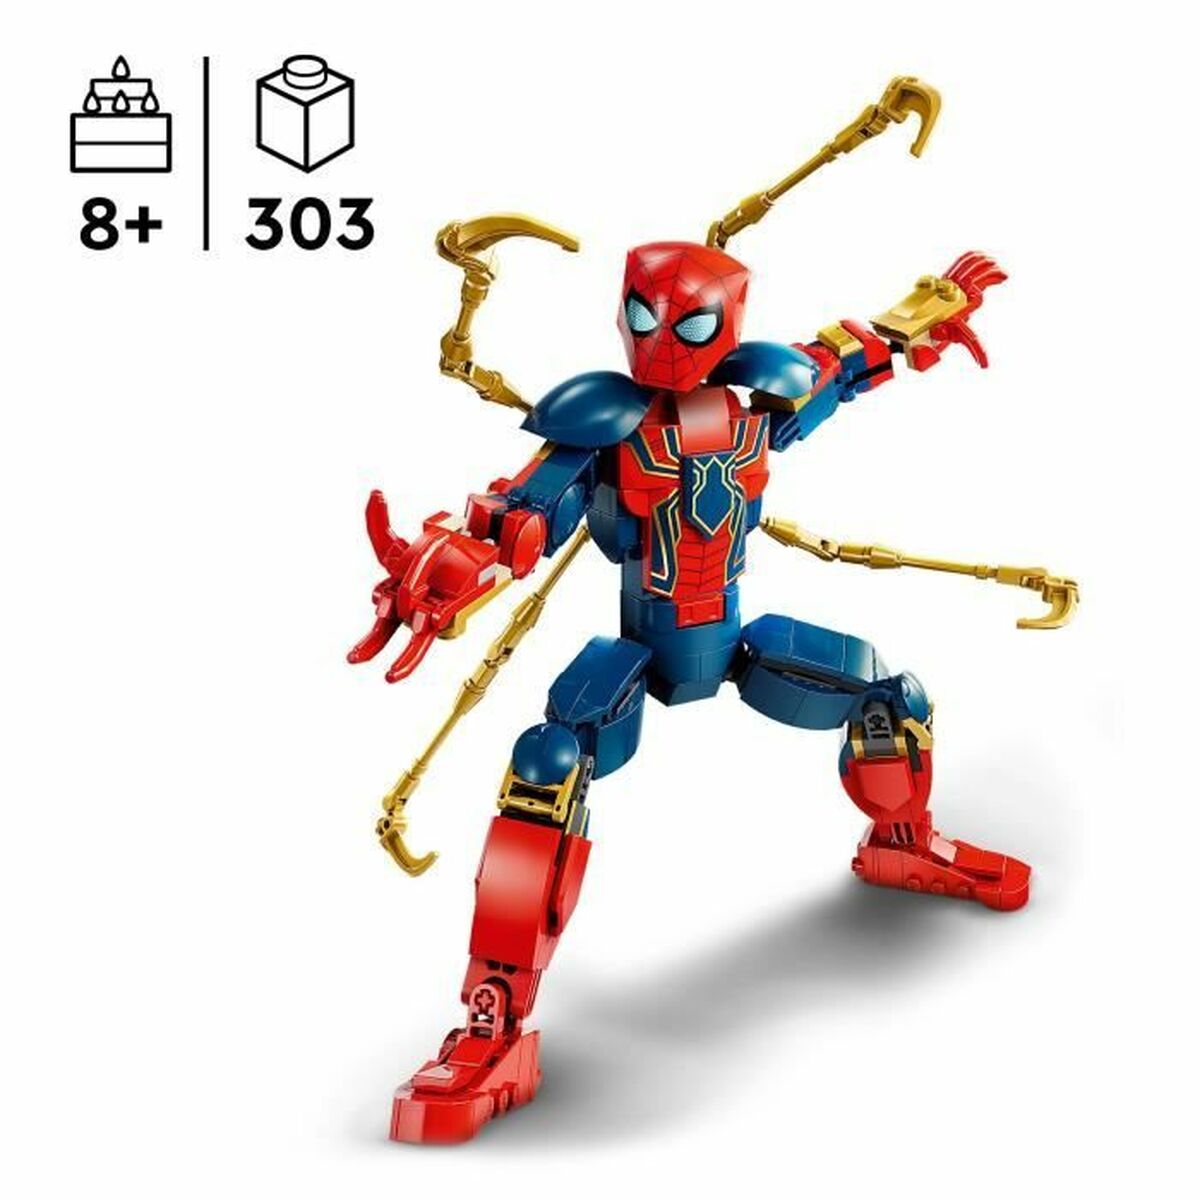 Construction set Lego 76298 Marvel Spiderman